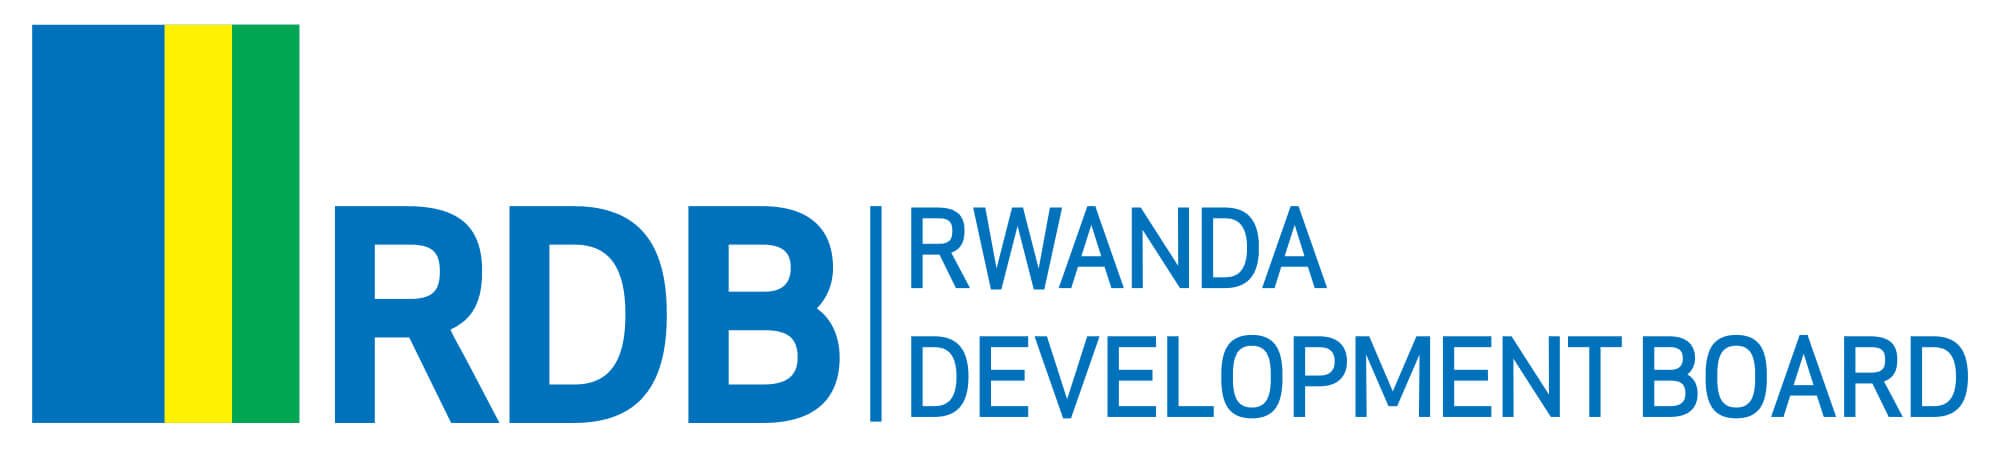 rdb-logo.jpeg